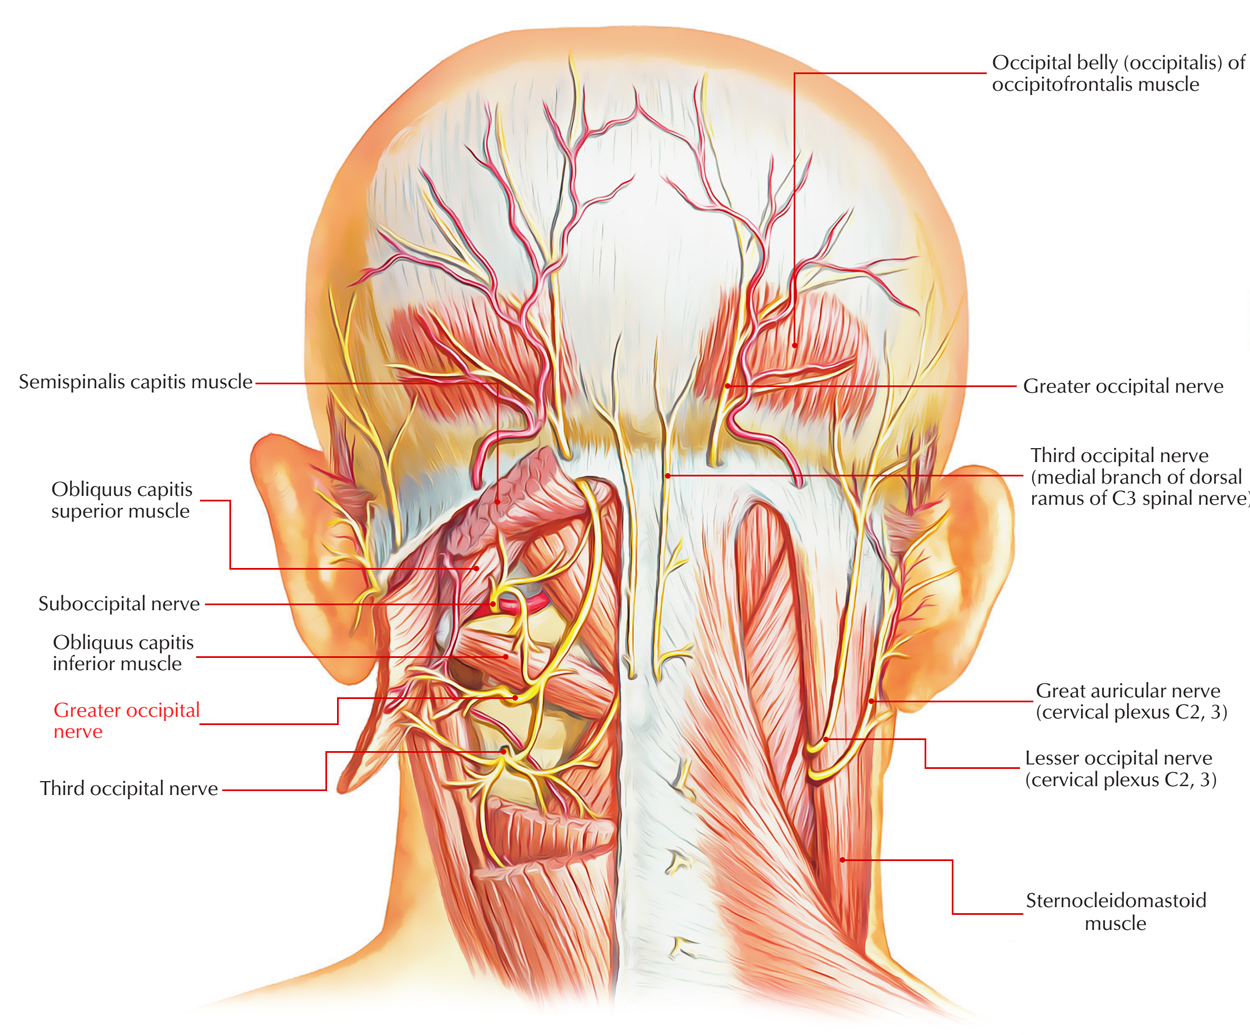 Greater Occipital Nerve